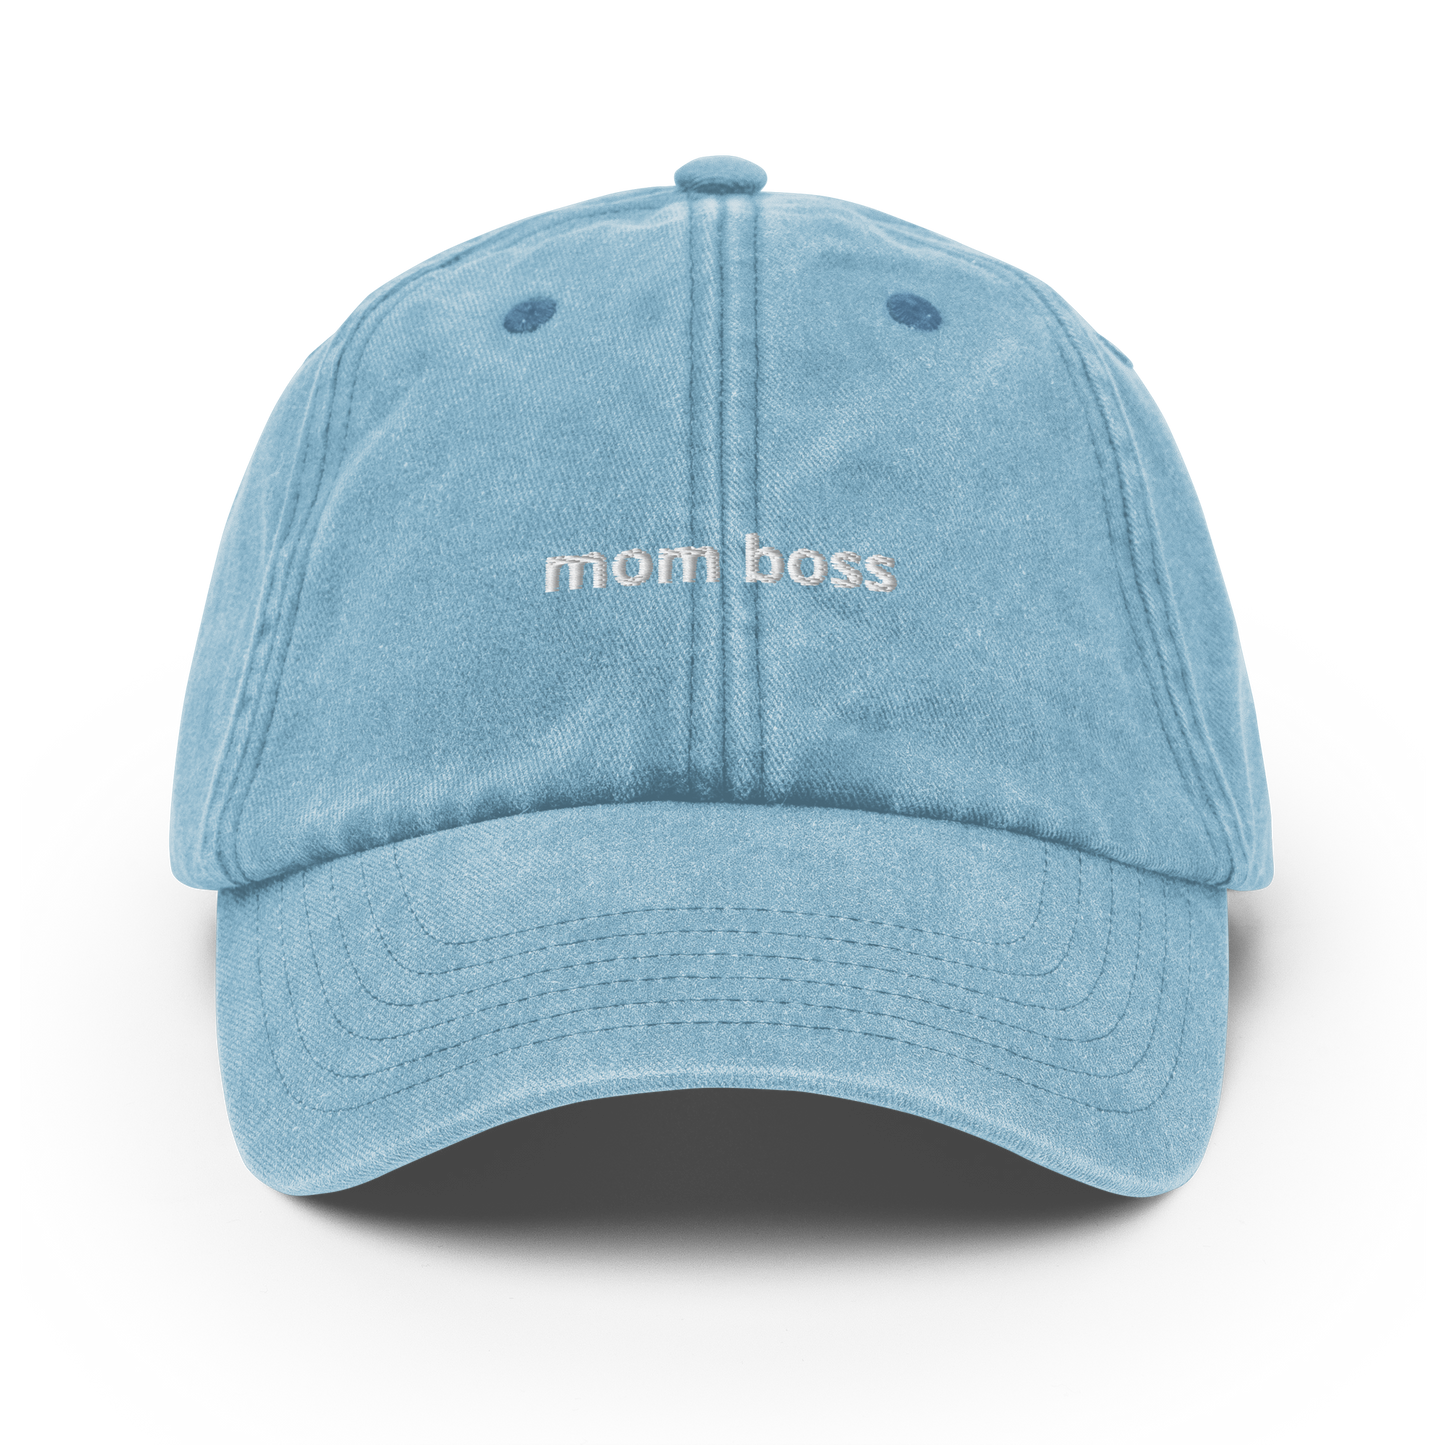 Mom Boss - Vintage Hat